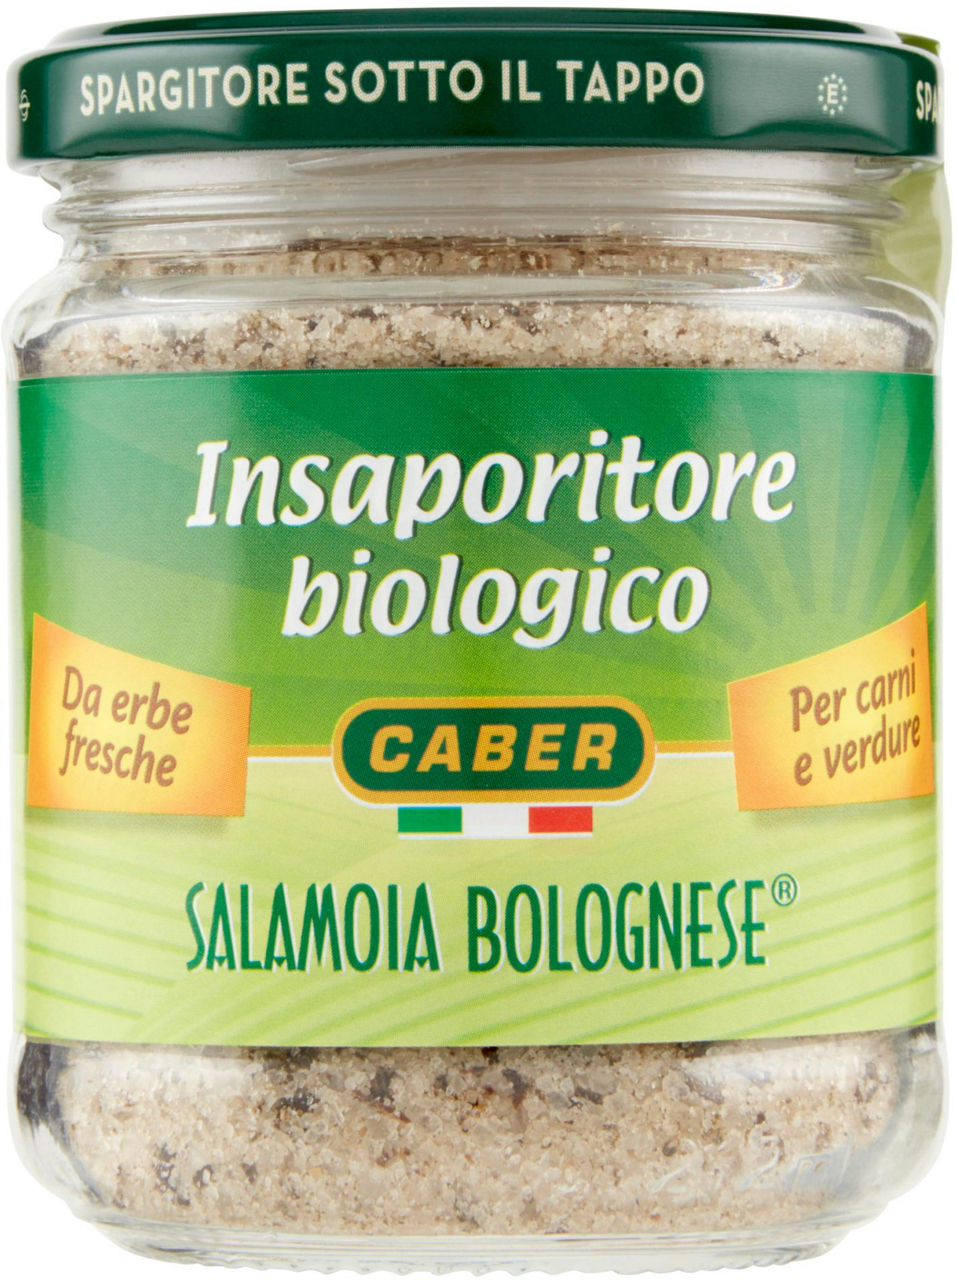 Salamoia bolognese bio caber vv gr.200